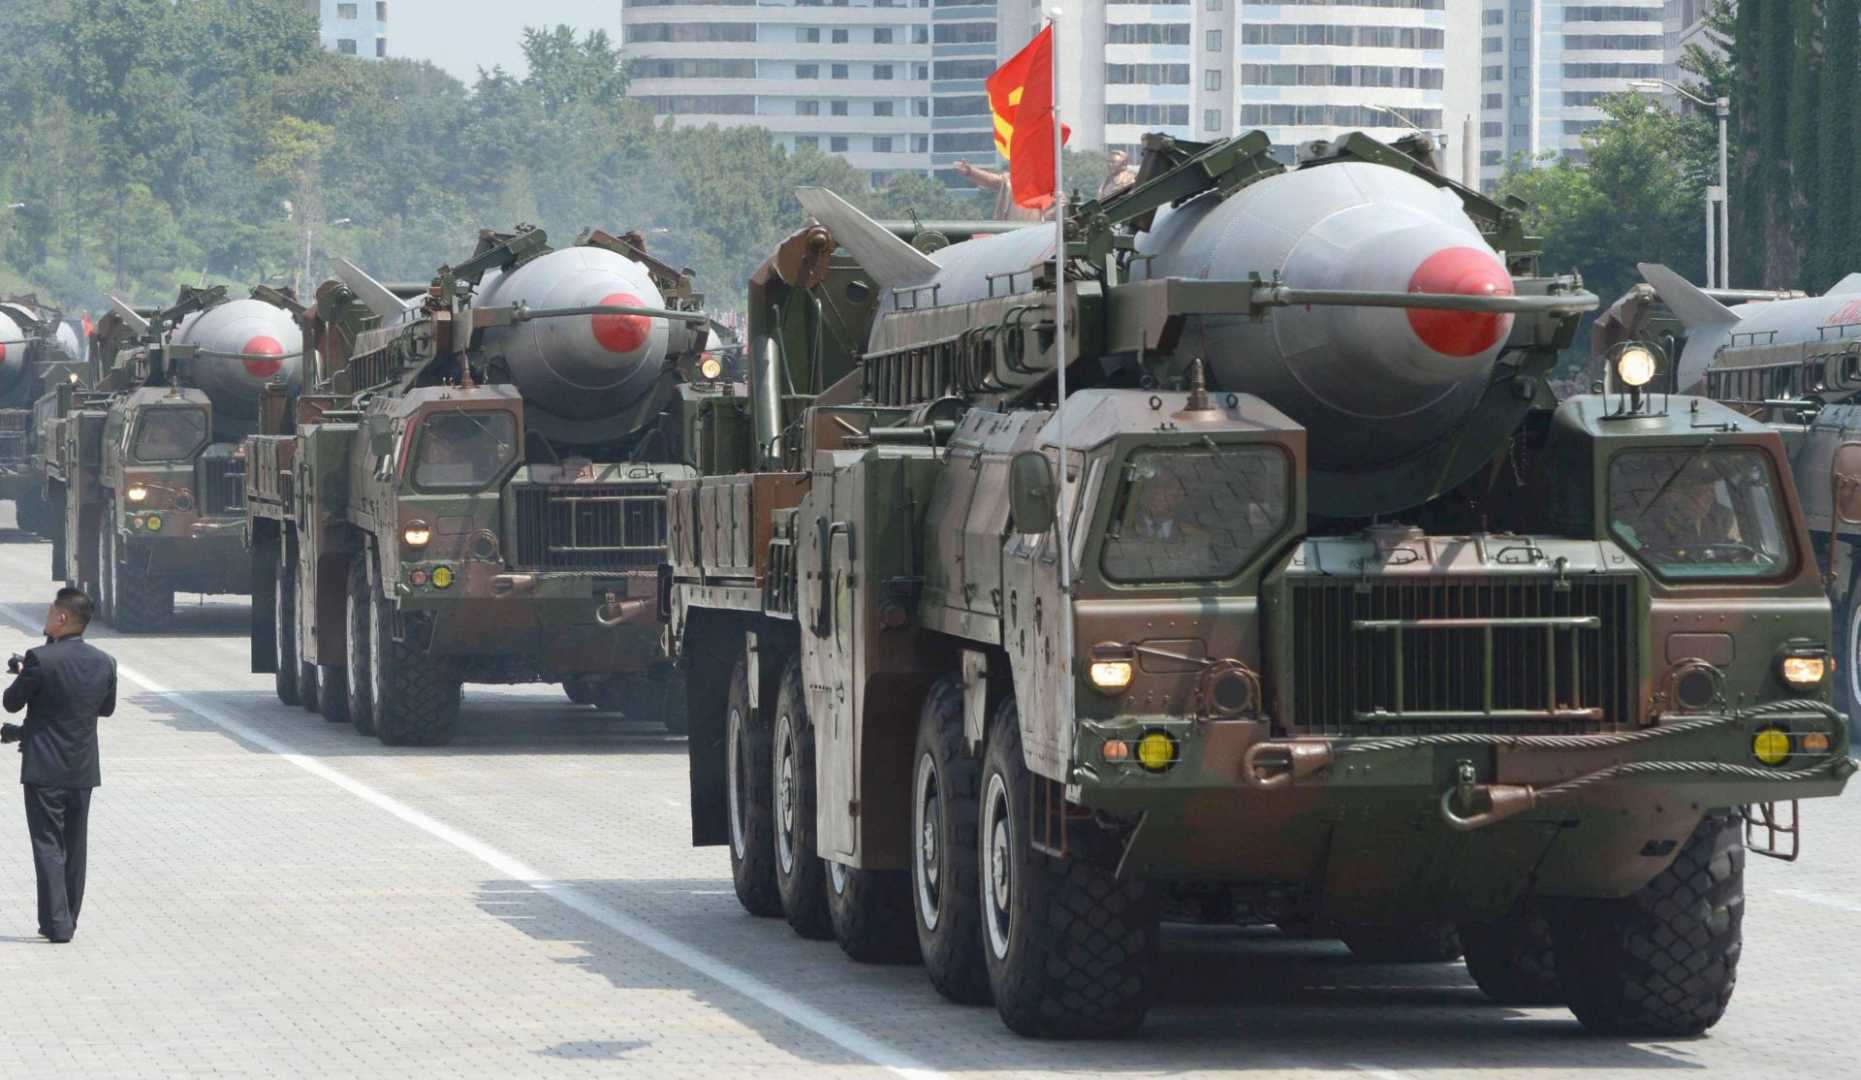 North Korea's Nodong missiles